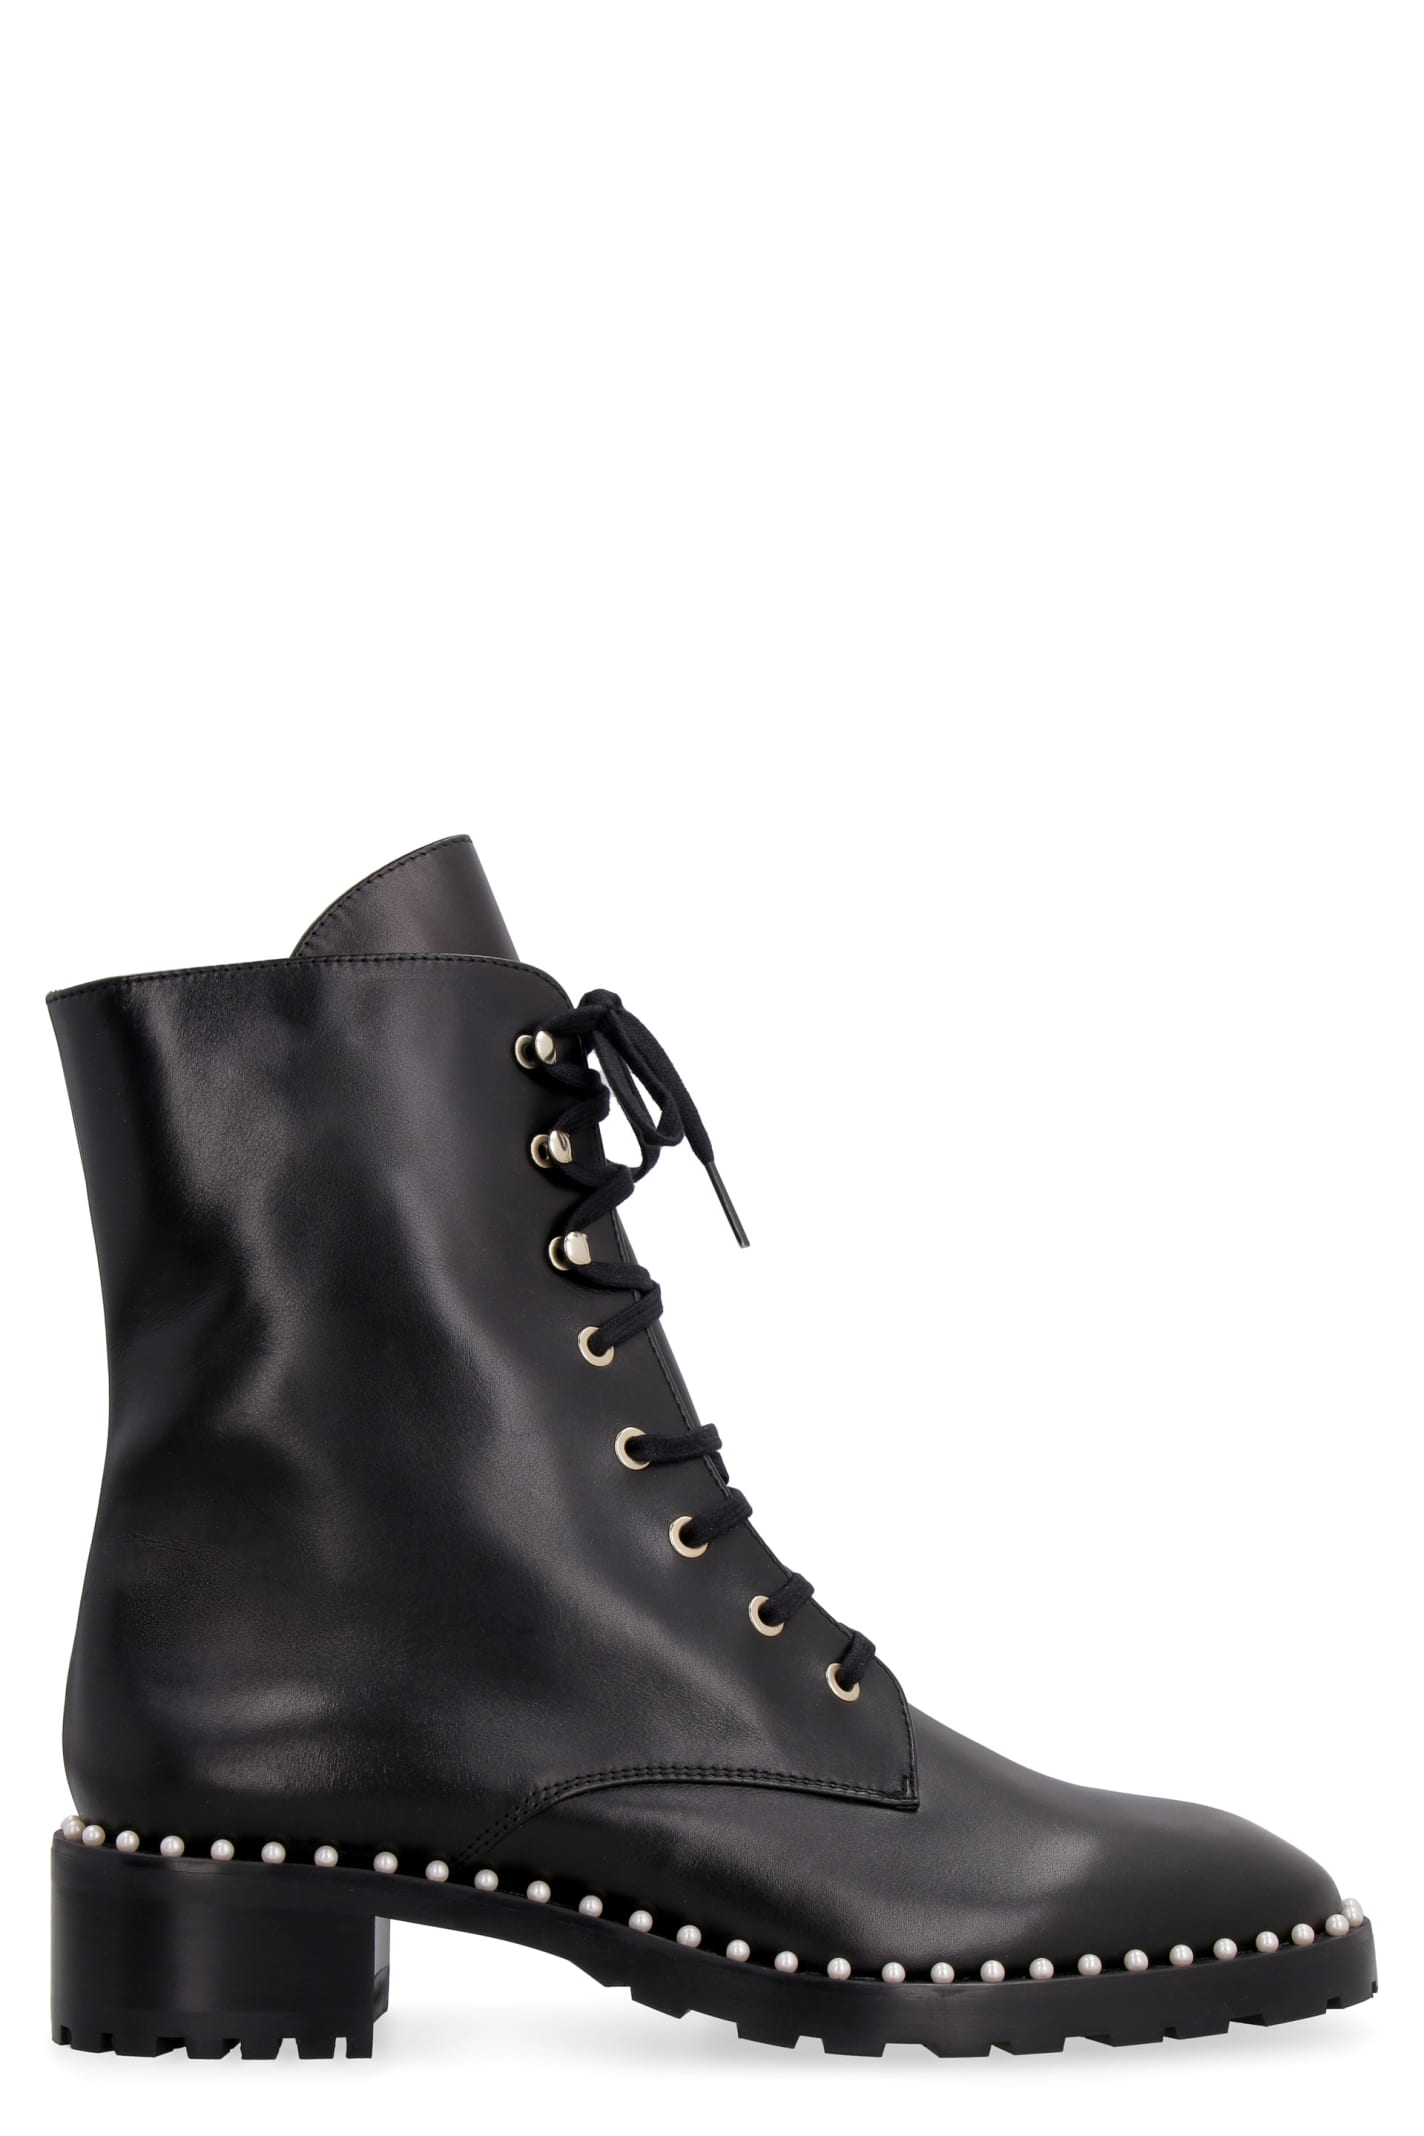 Buy Stuart Weitzman Allie Leather Combat Boots online, shop Stuart Weitzman shoes with free shipping